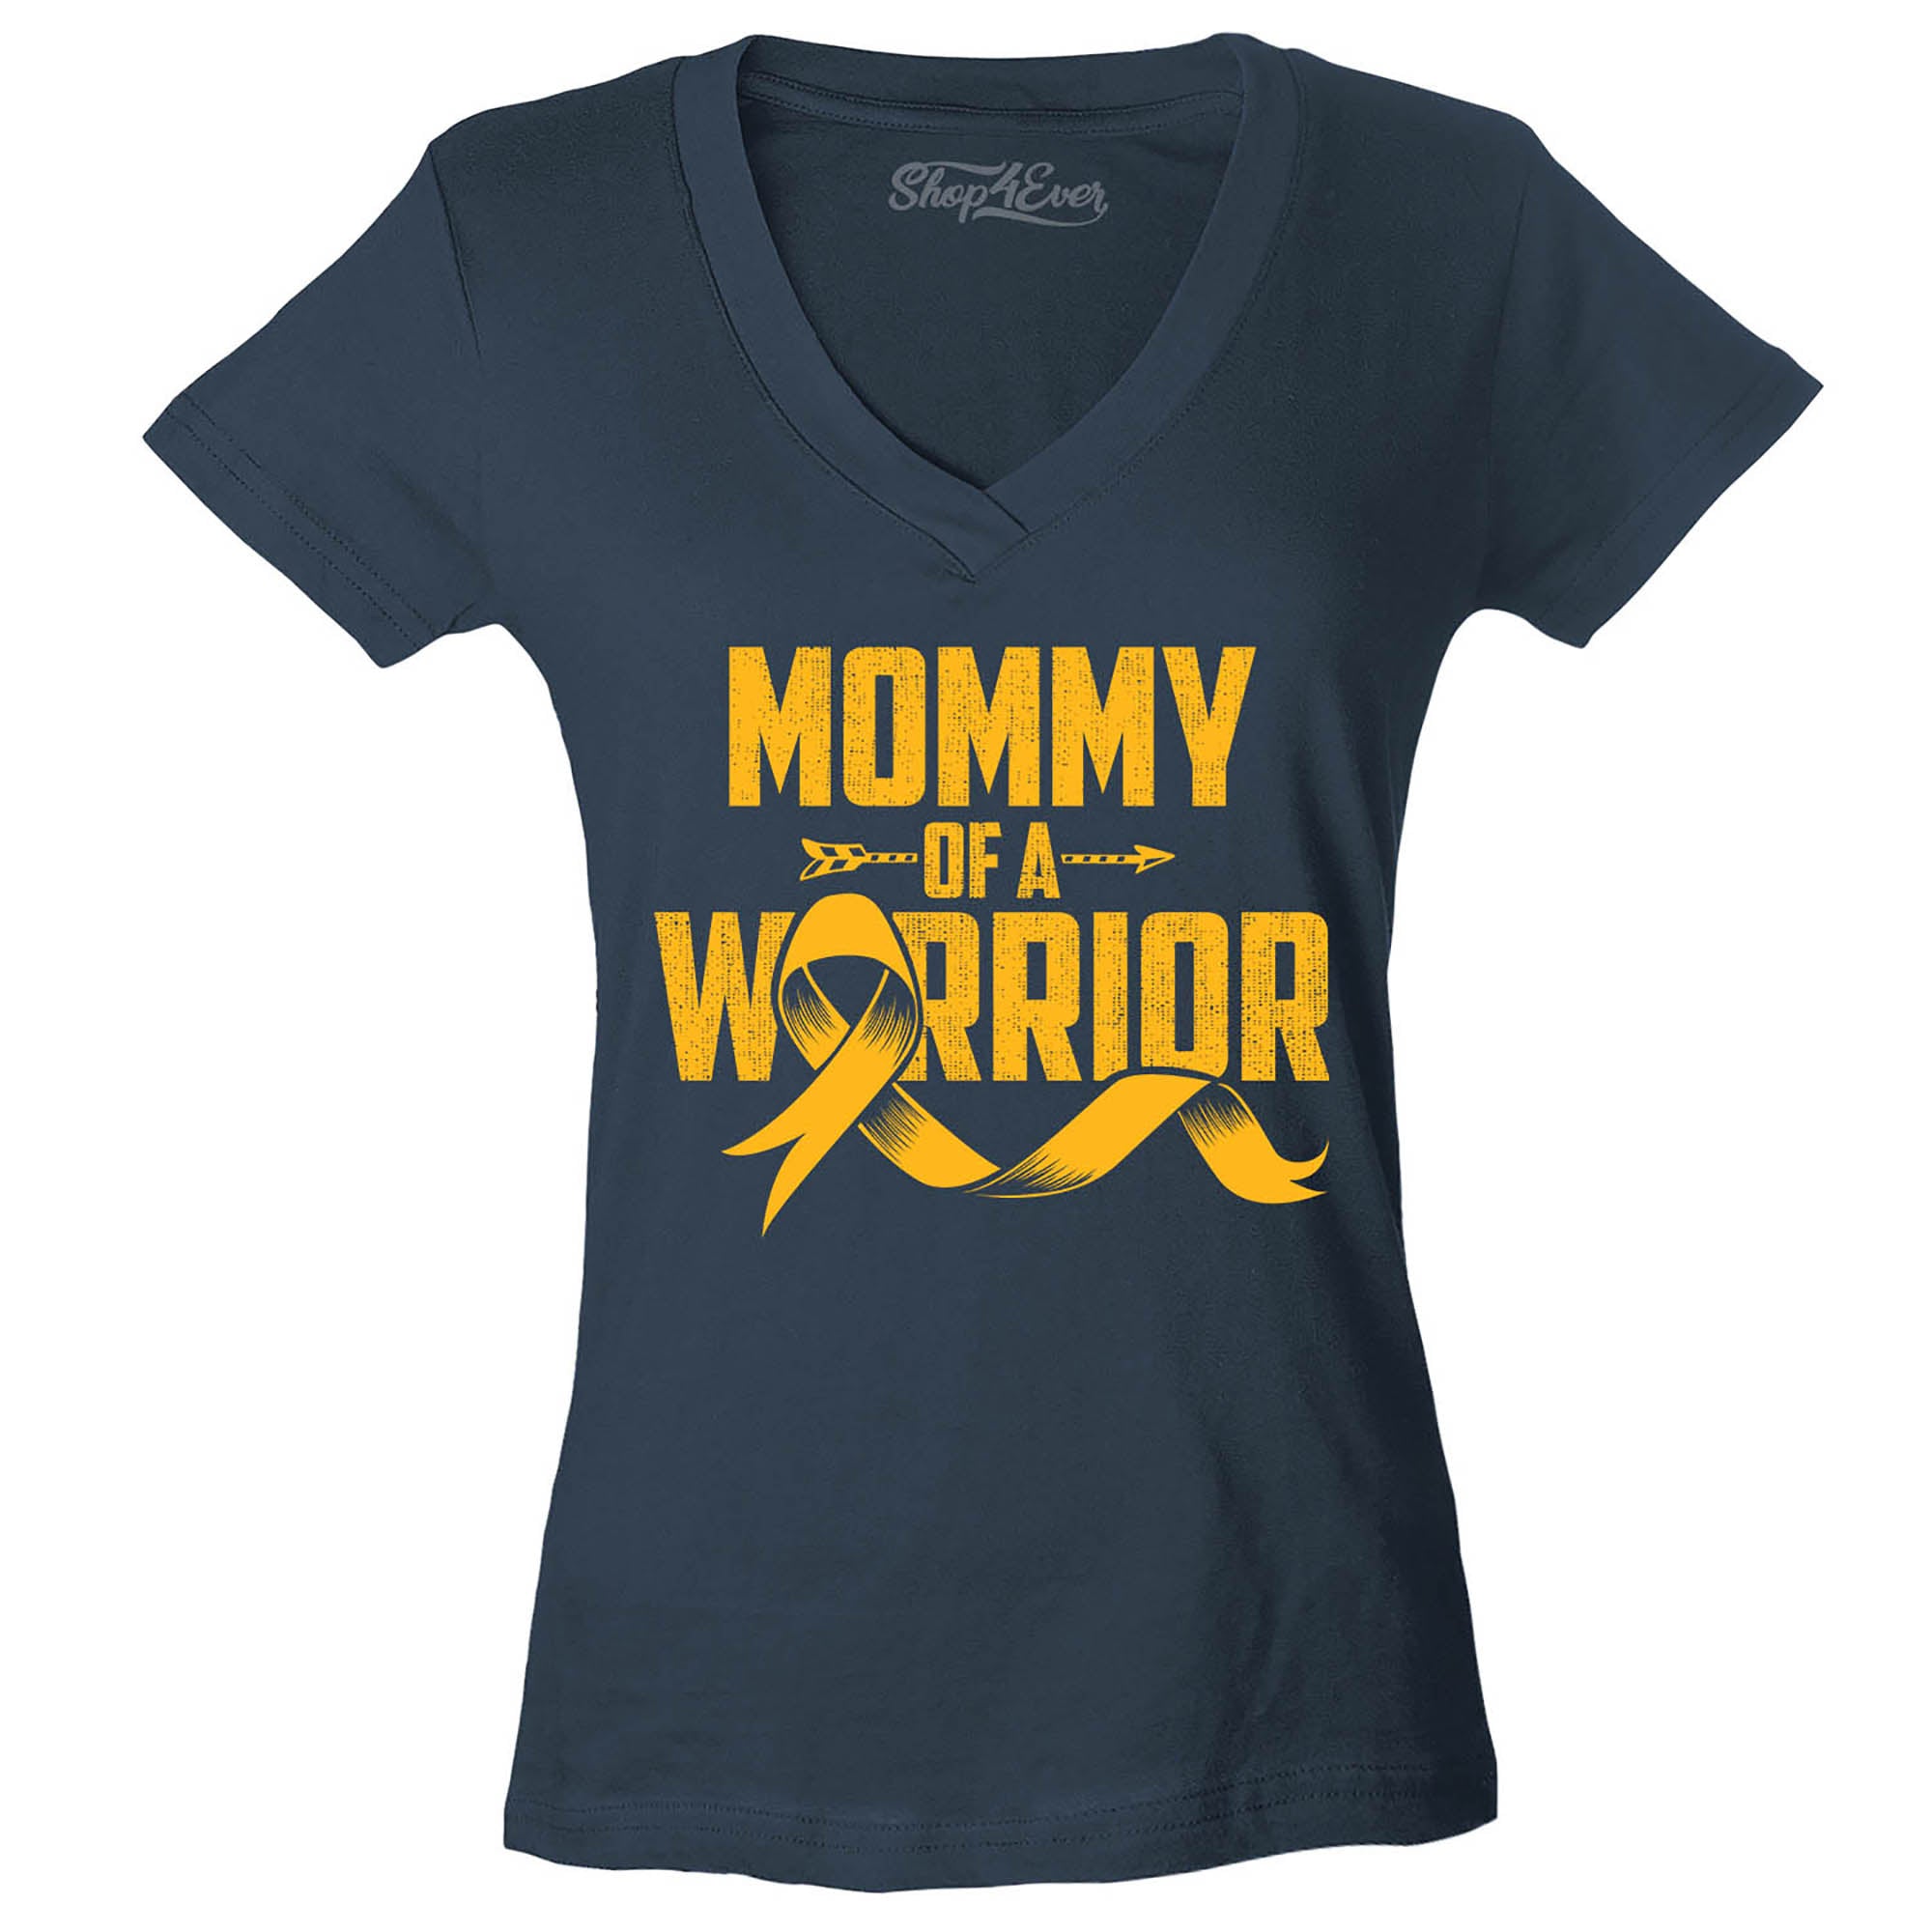 Mommy of a Warrior Childhood Cancer Awareness Women's V-Neck T-Shirt Slim Fit